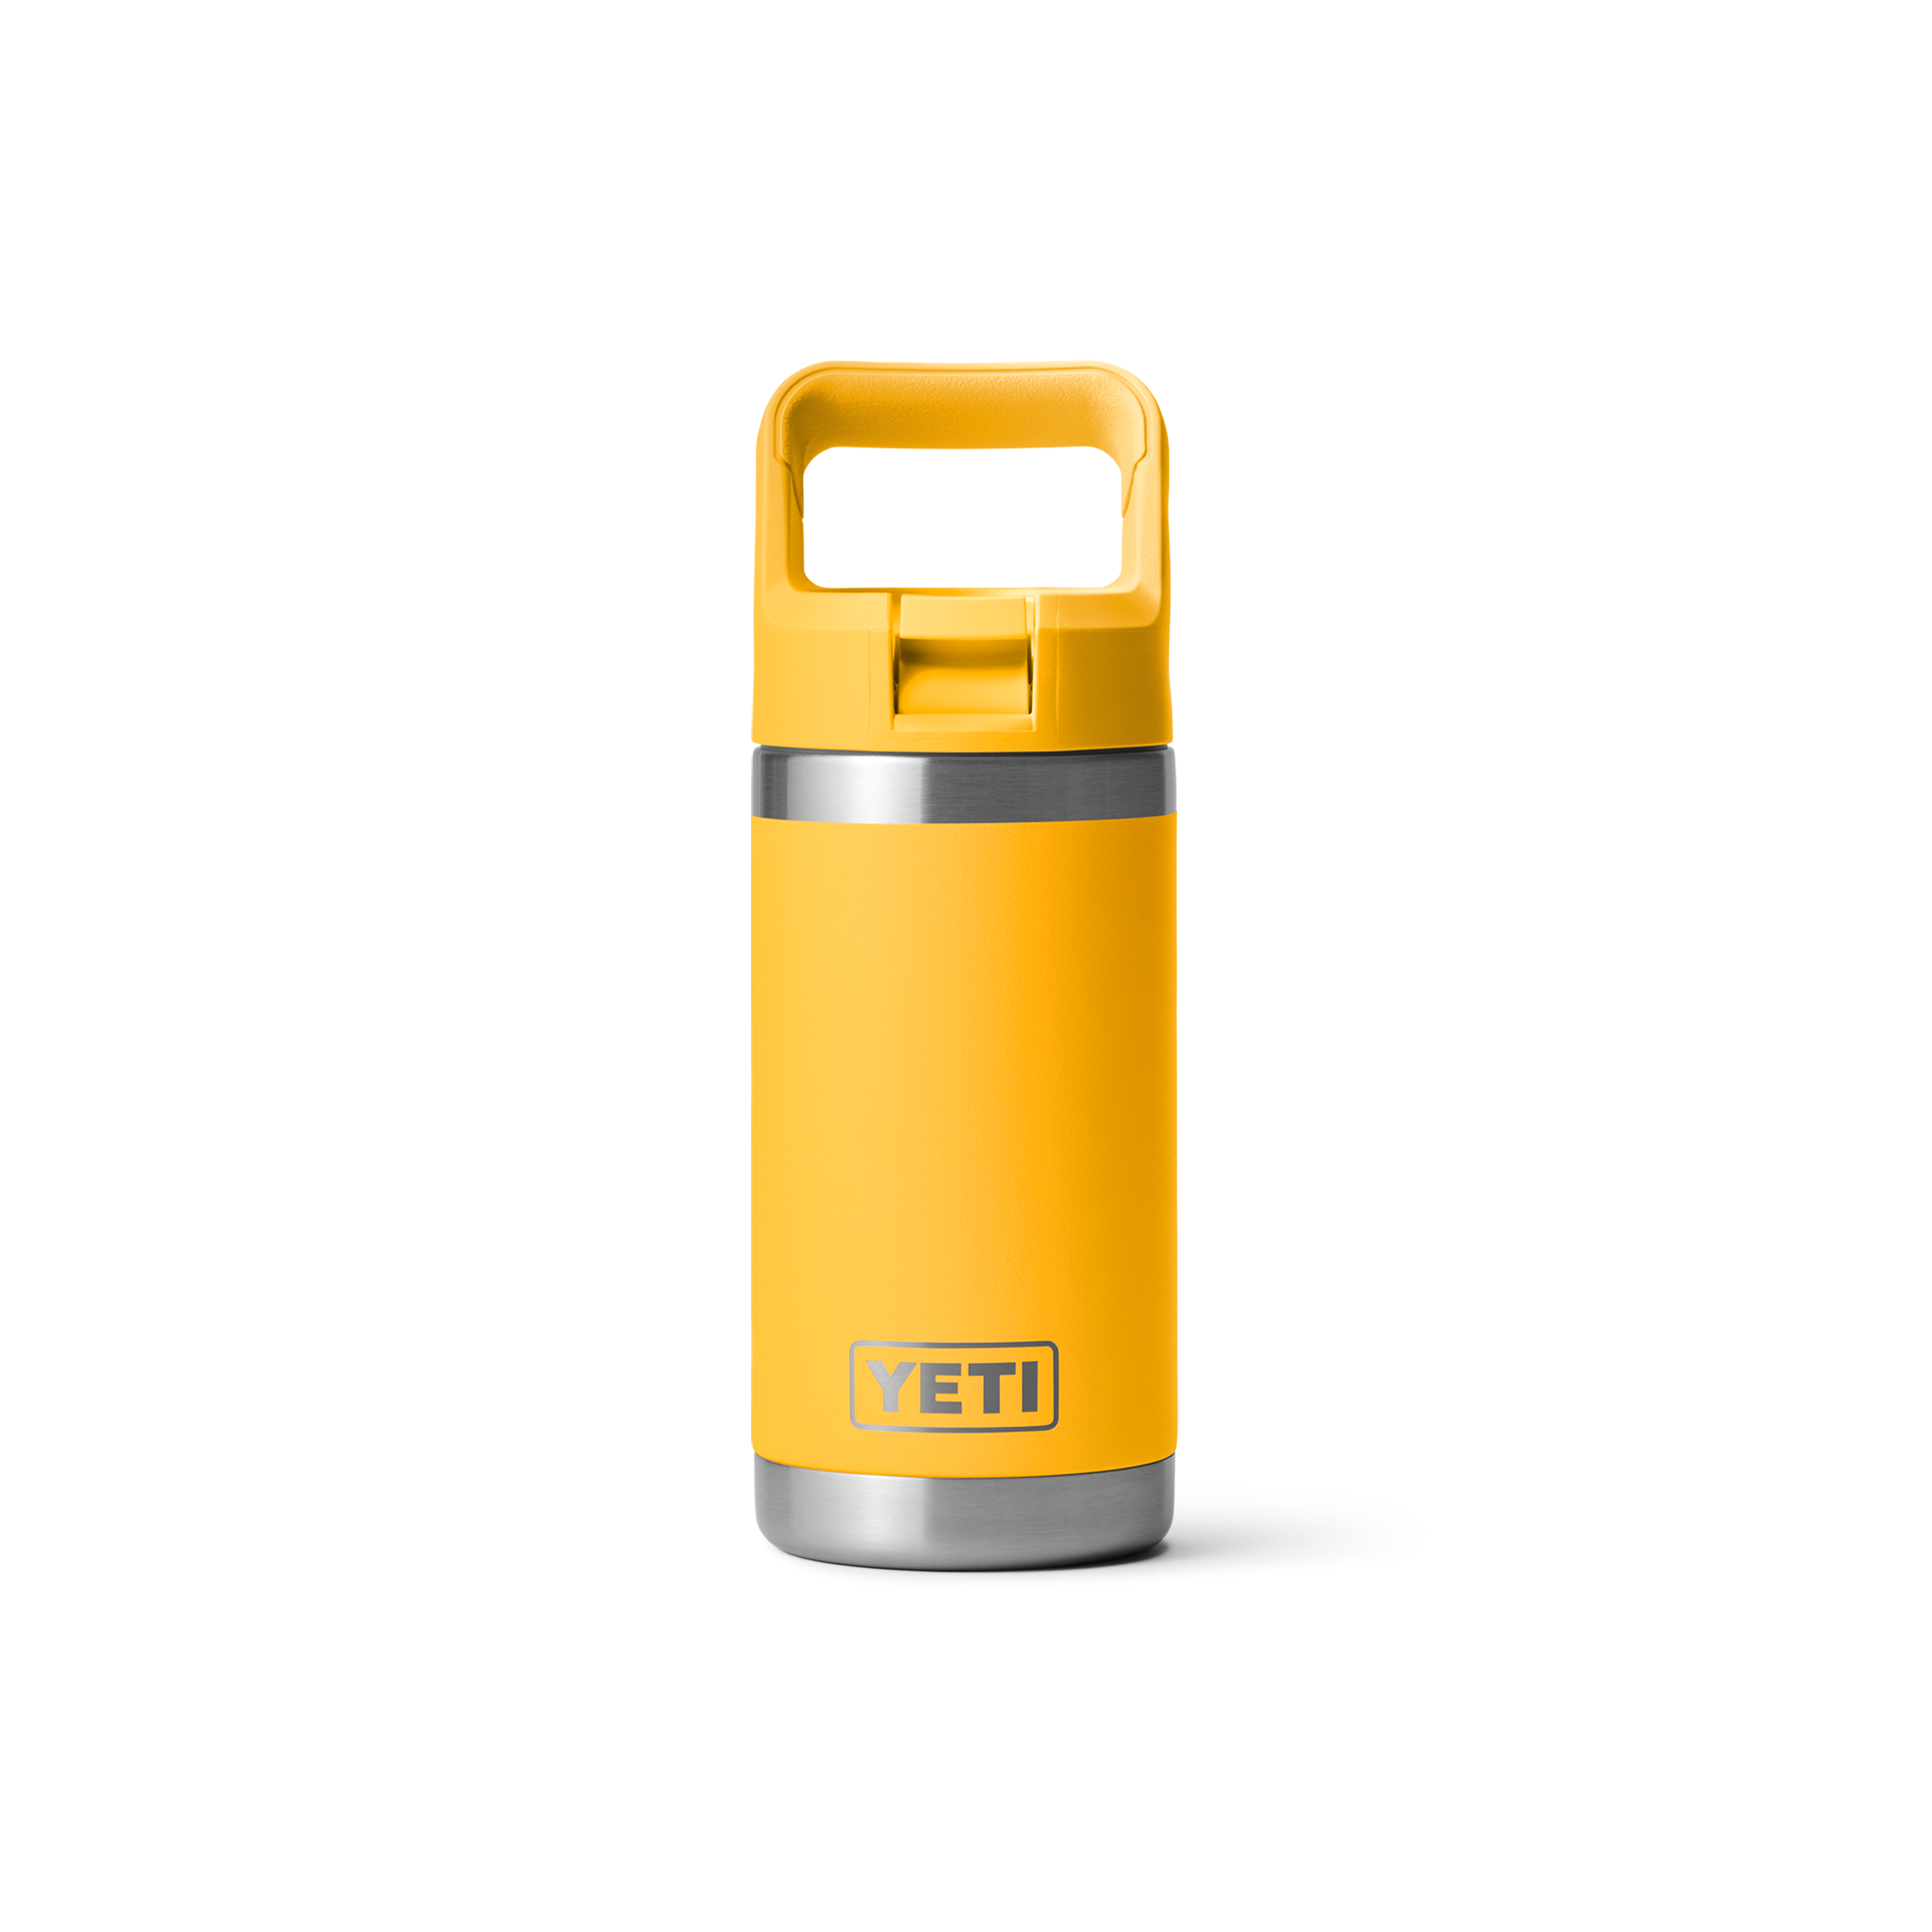 YETI - Rambler 26 oz Water Bottle - Alpine Yellow